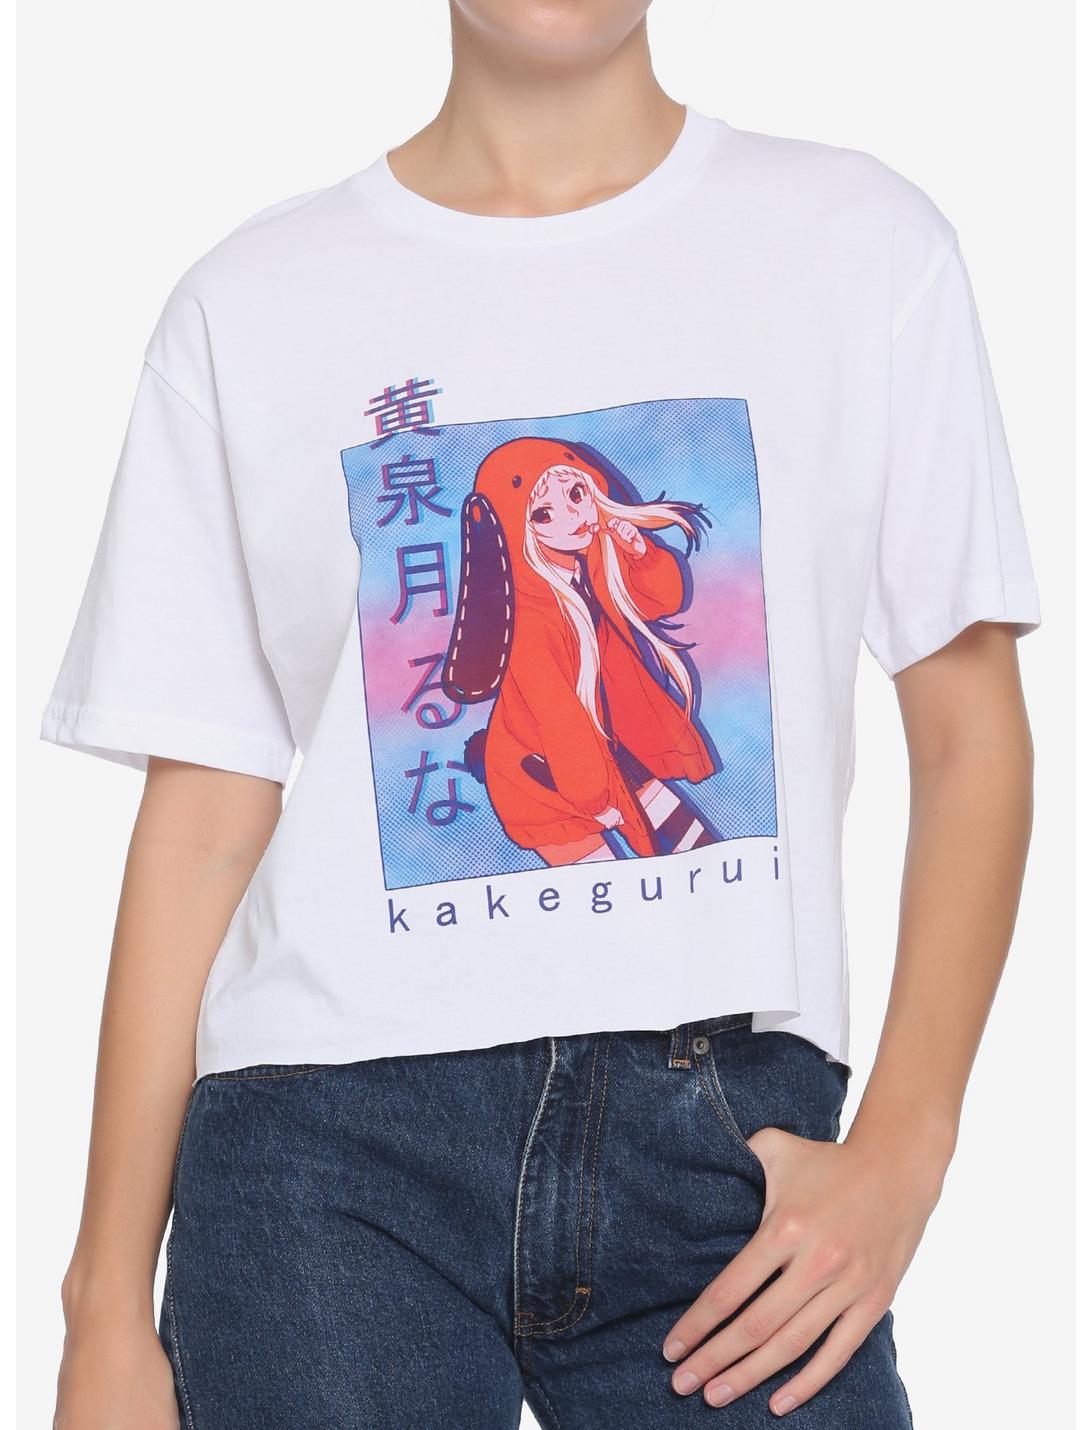 Kakegurui Yomozuki Boyfriend Fit Girls Crop T-Shirt, MULTI, hi-res